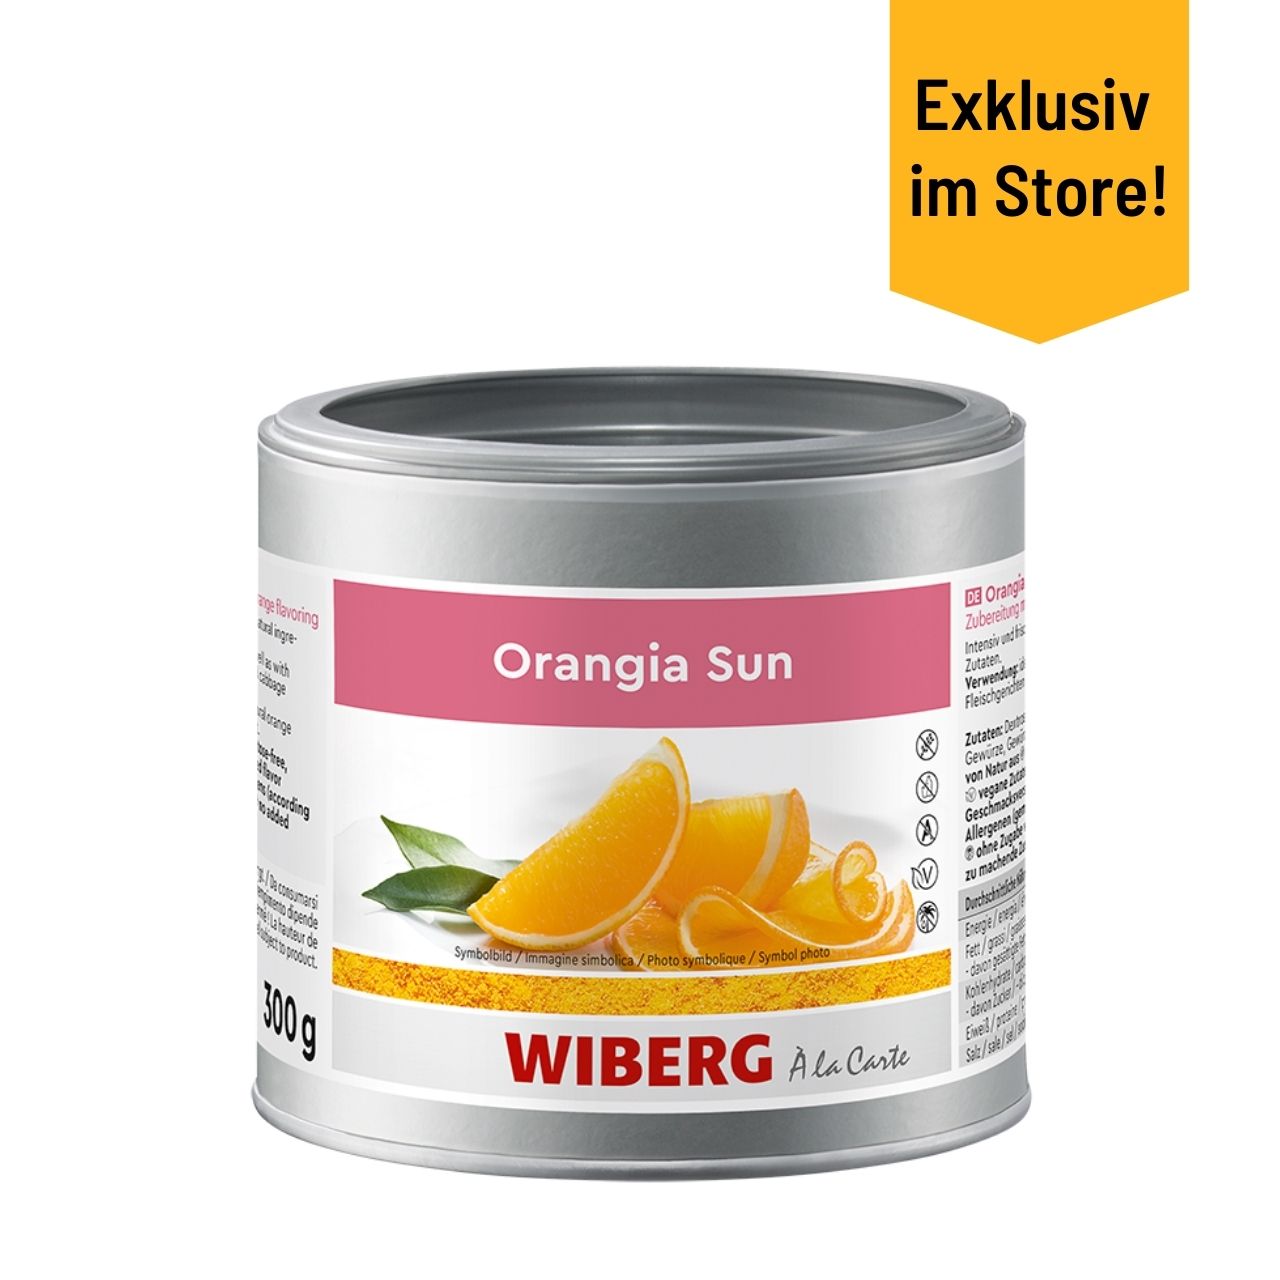 Wiberg - Orangia Sun, 470 ml